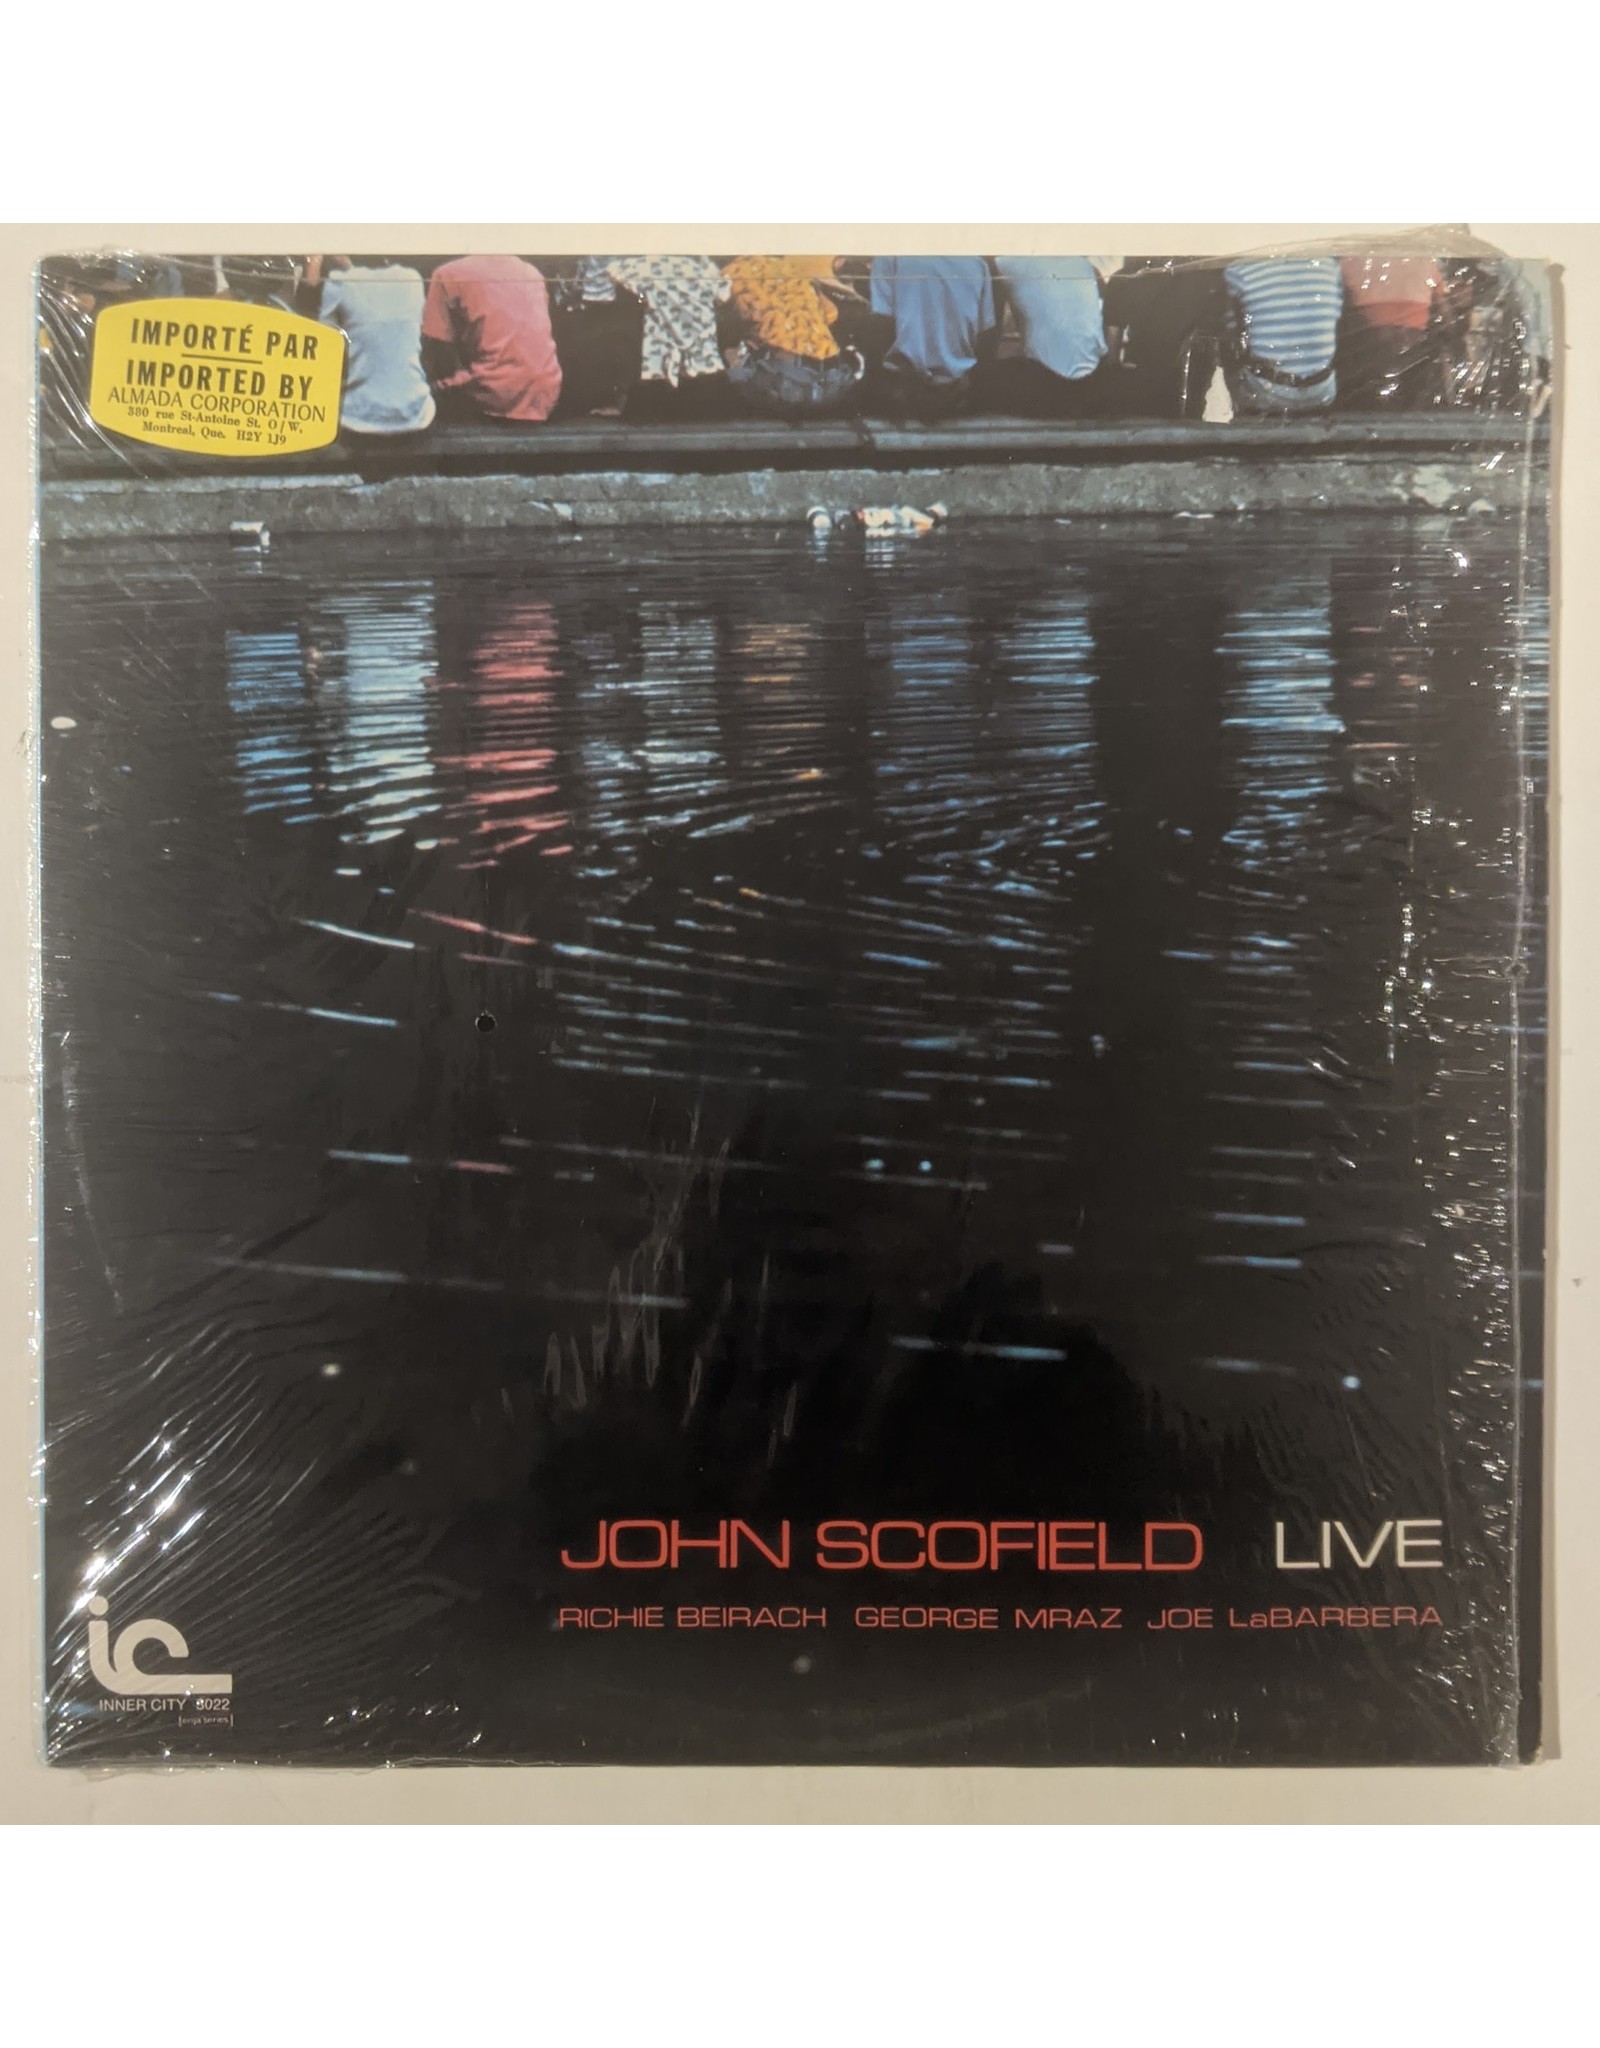 USED: John Scofield: Live LP